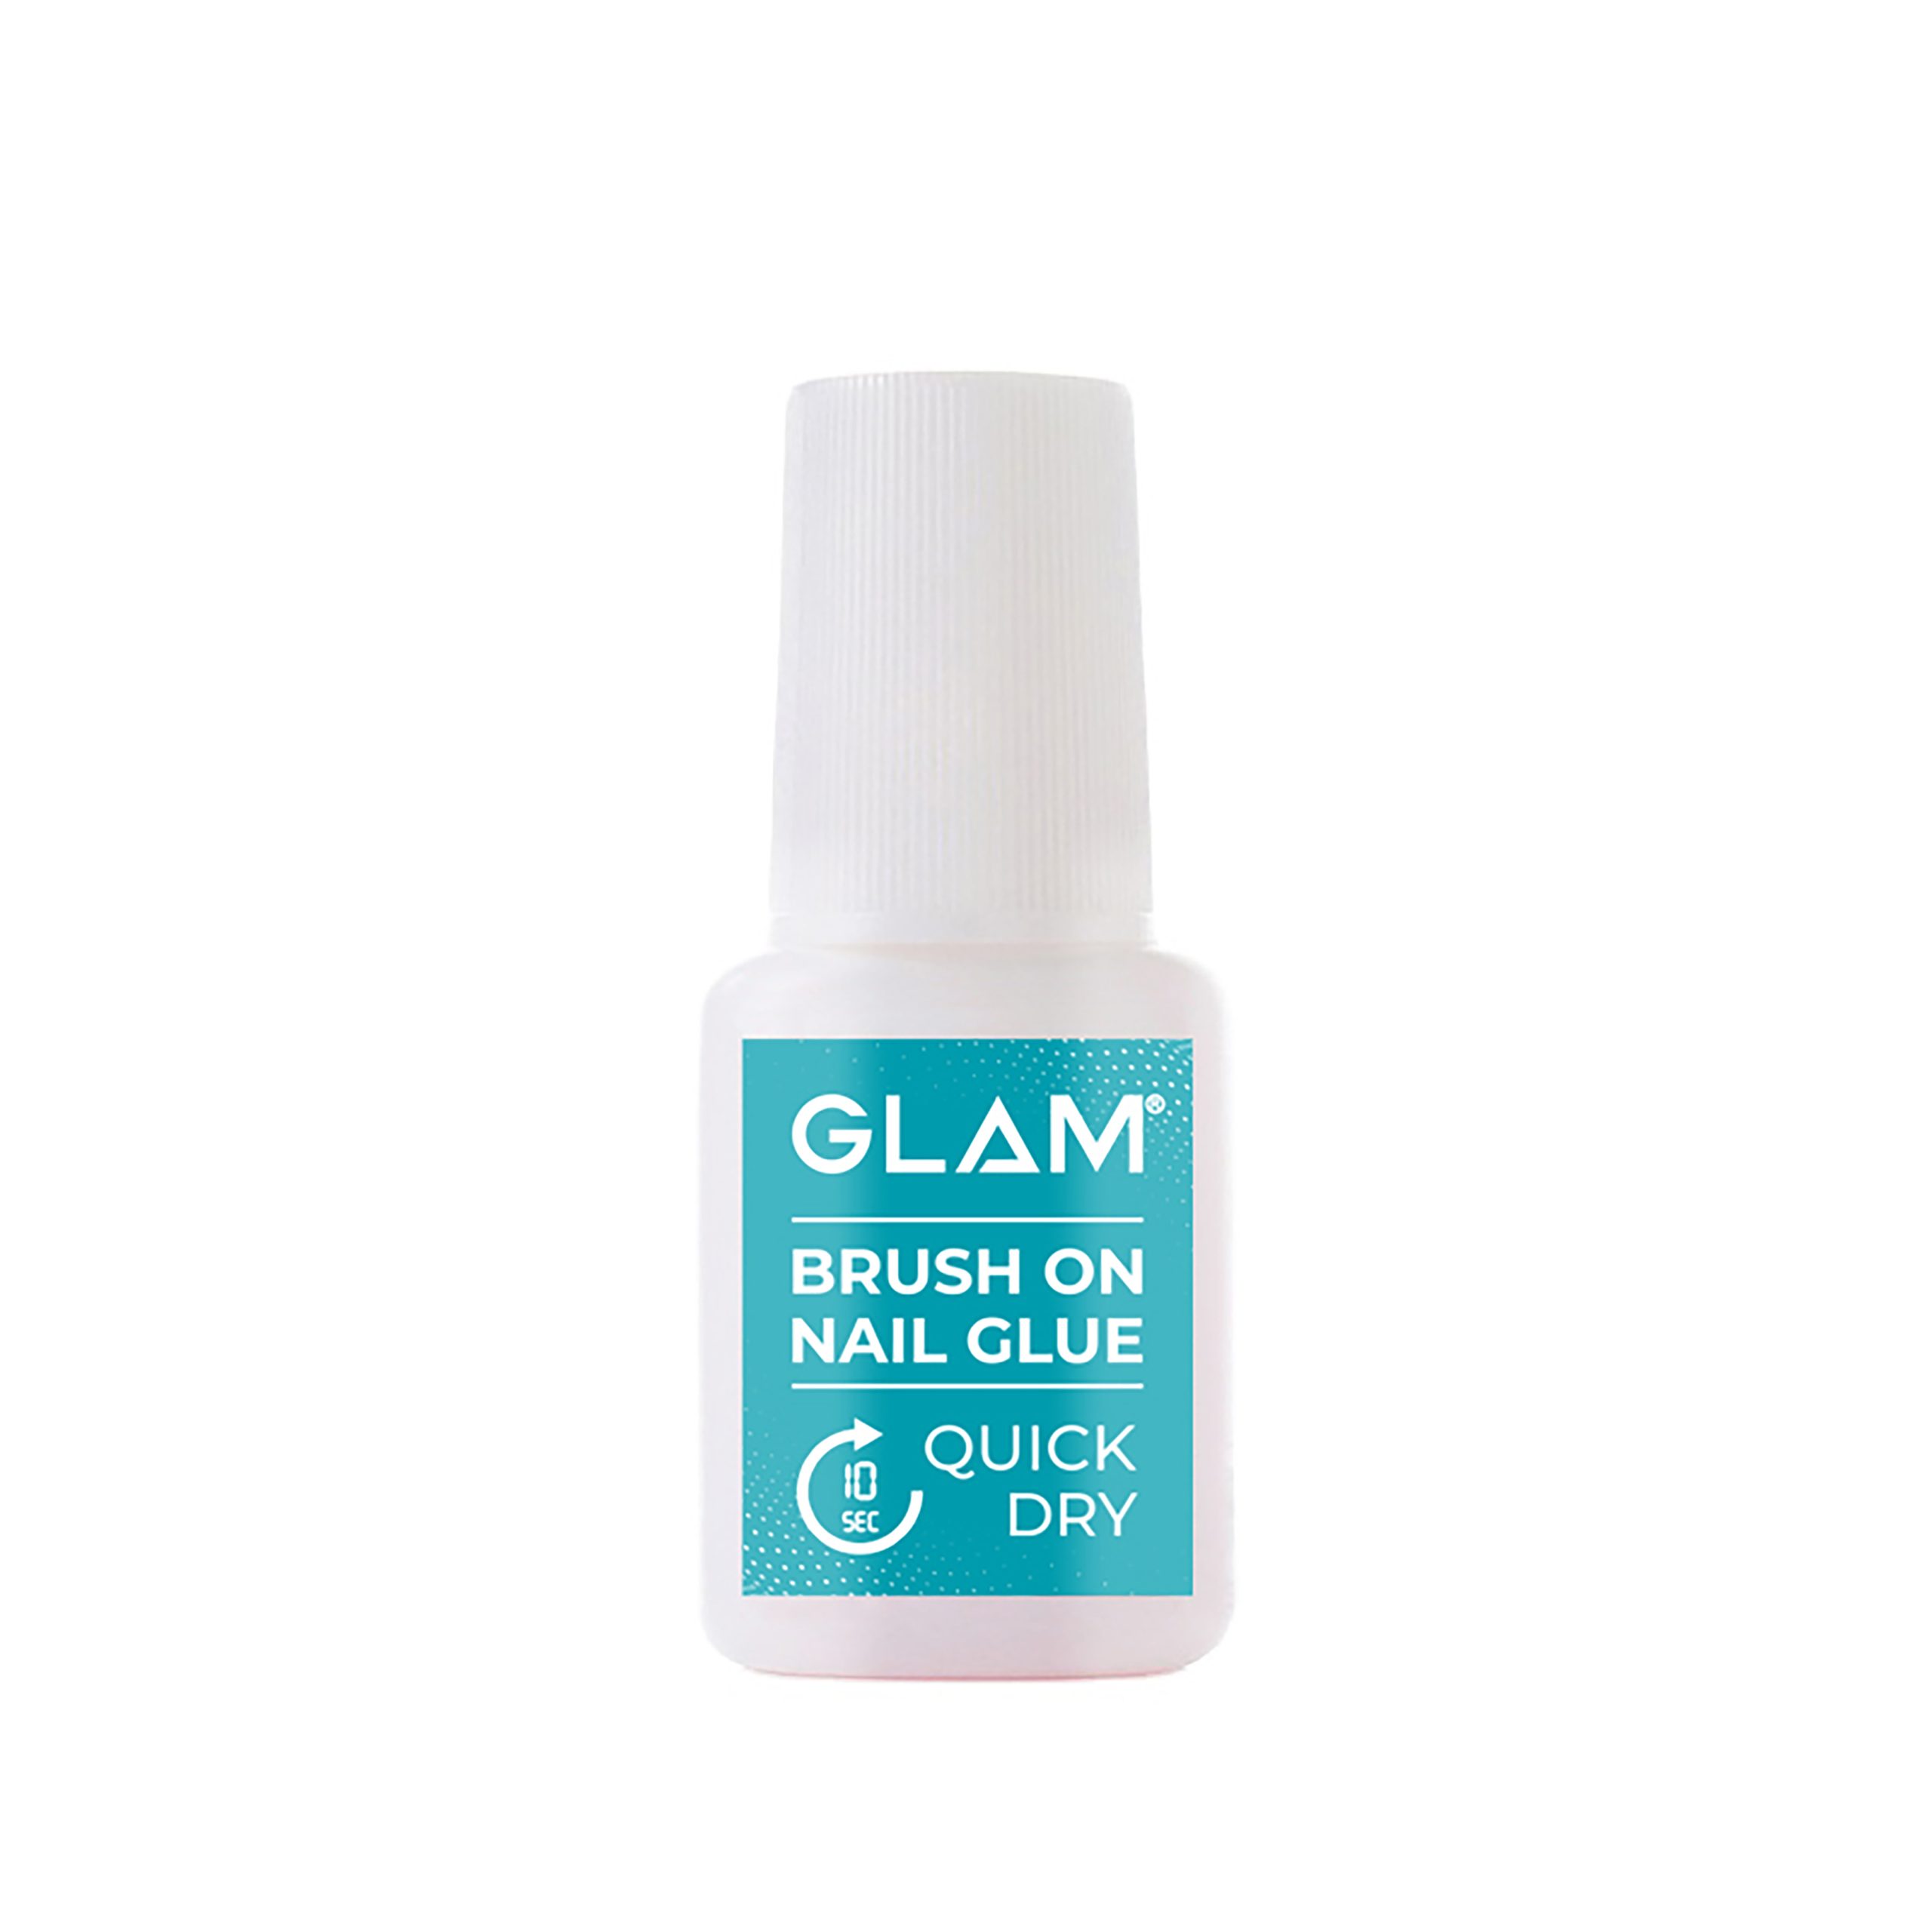 Glam Brush on nail glue